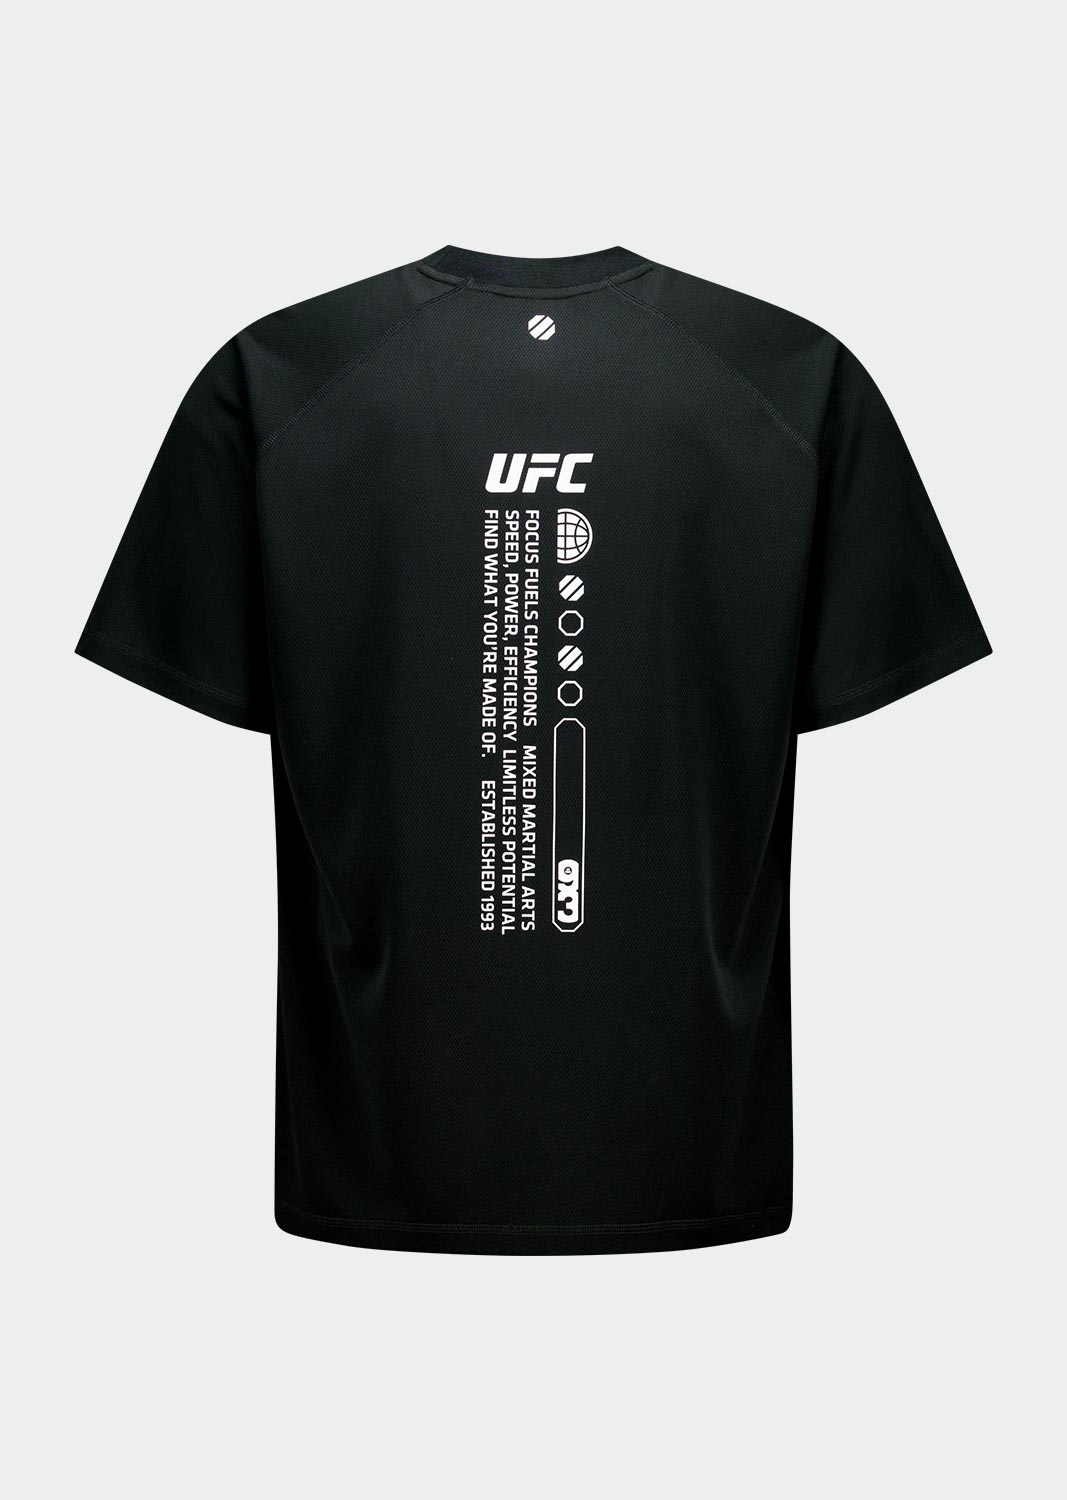 UFC 메쉬+ 릴렉스핏 반팔 티셔츠 블랙 U4SSV2313BK